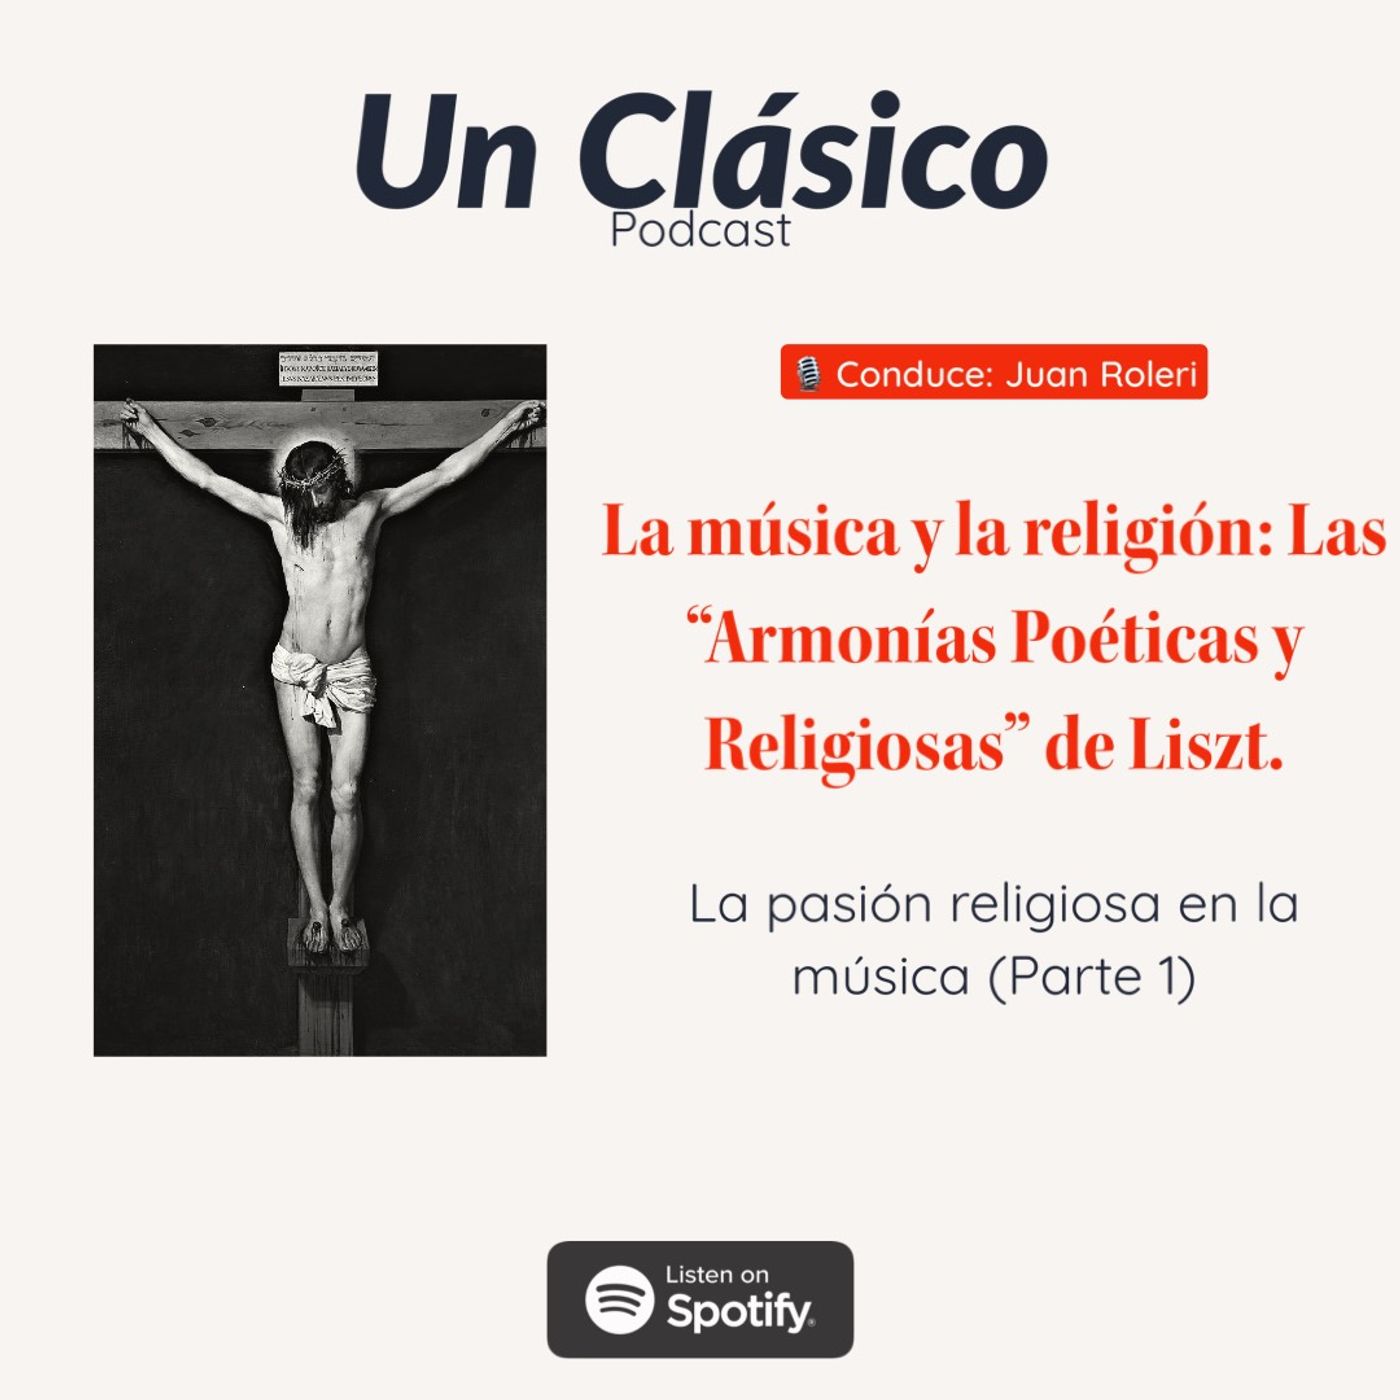 40 - La musica y la religion: Las "Armonias Poeticas y Religiosas" de Liszt.